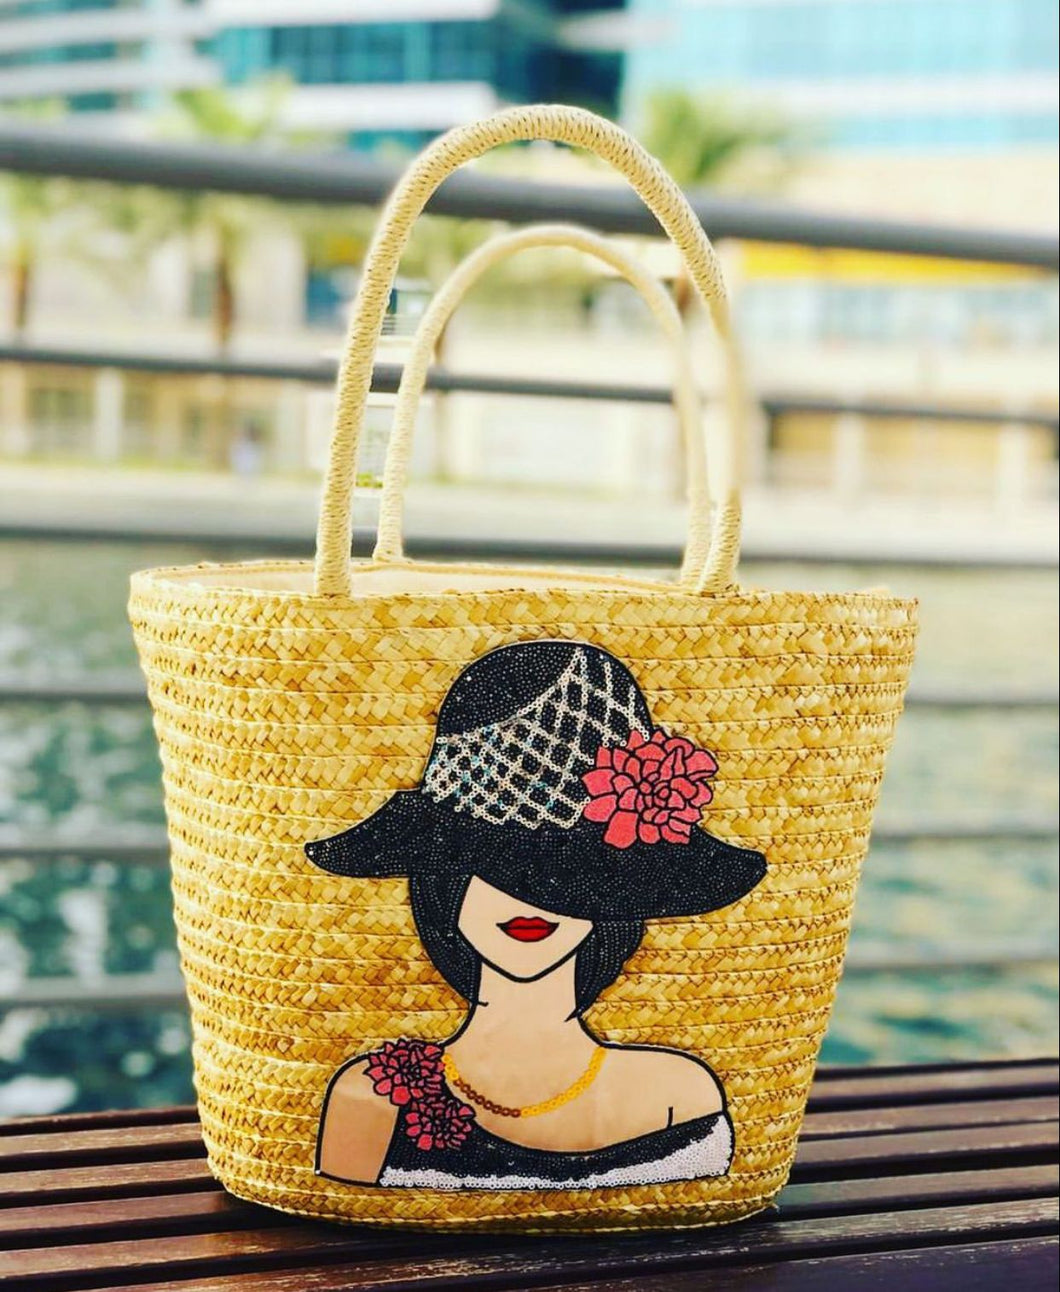 Straw basket with tropical lady